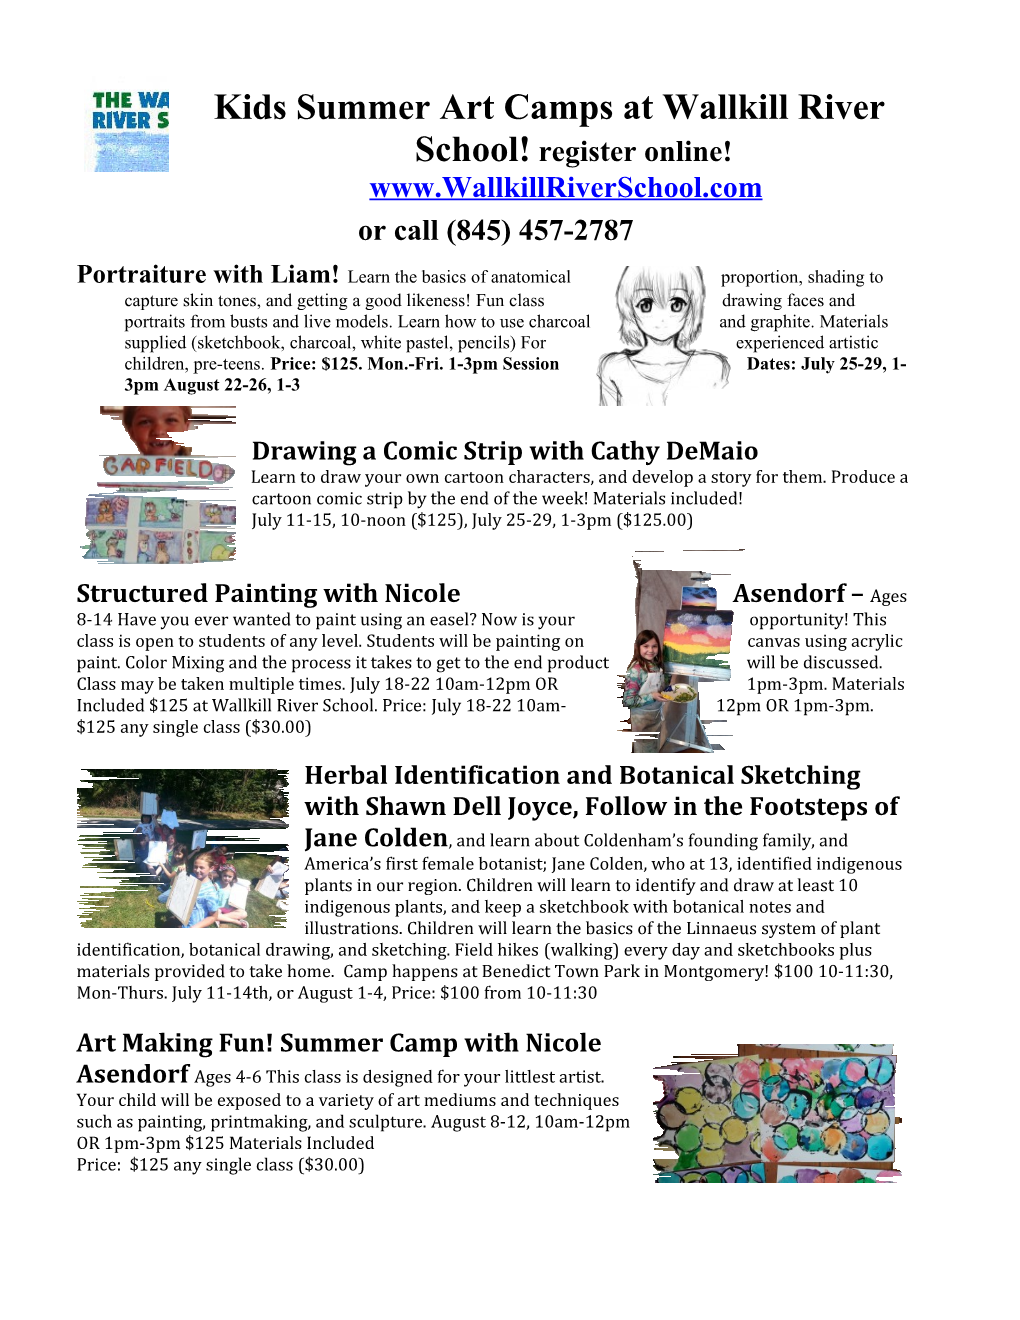 Kids Summer Art Camps at Wallkill River School!Register Online!